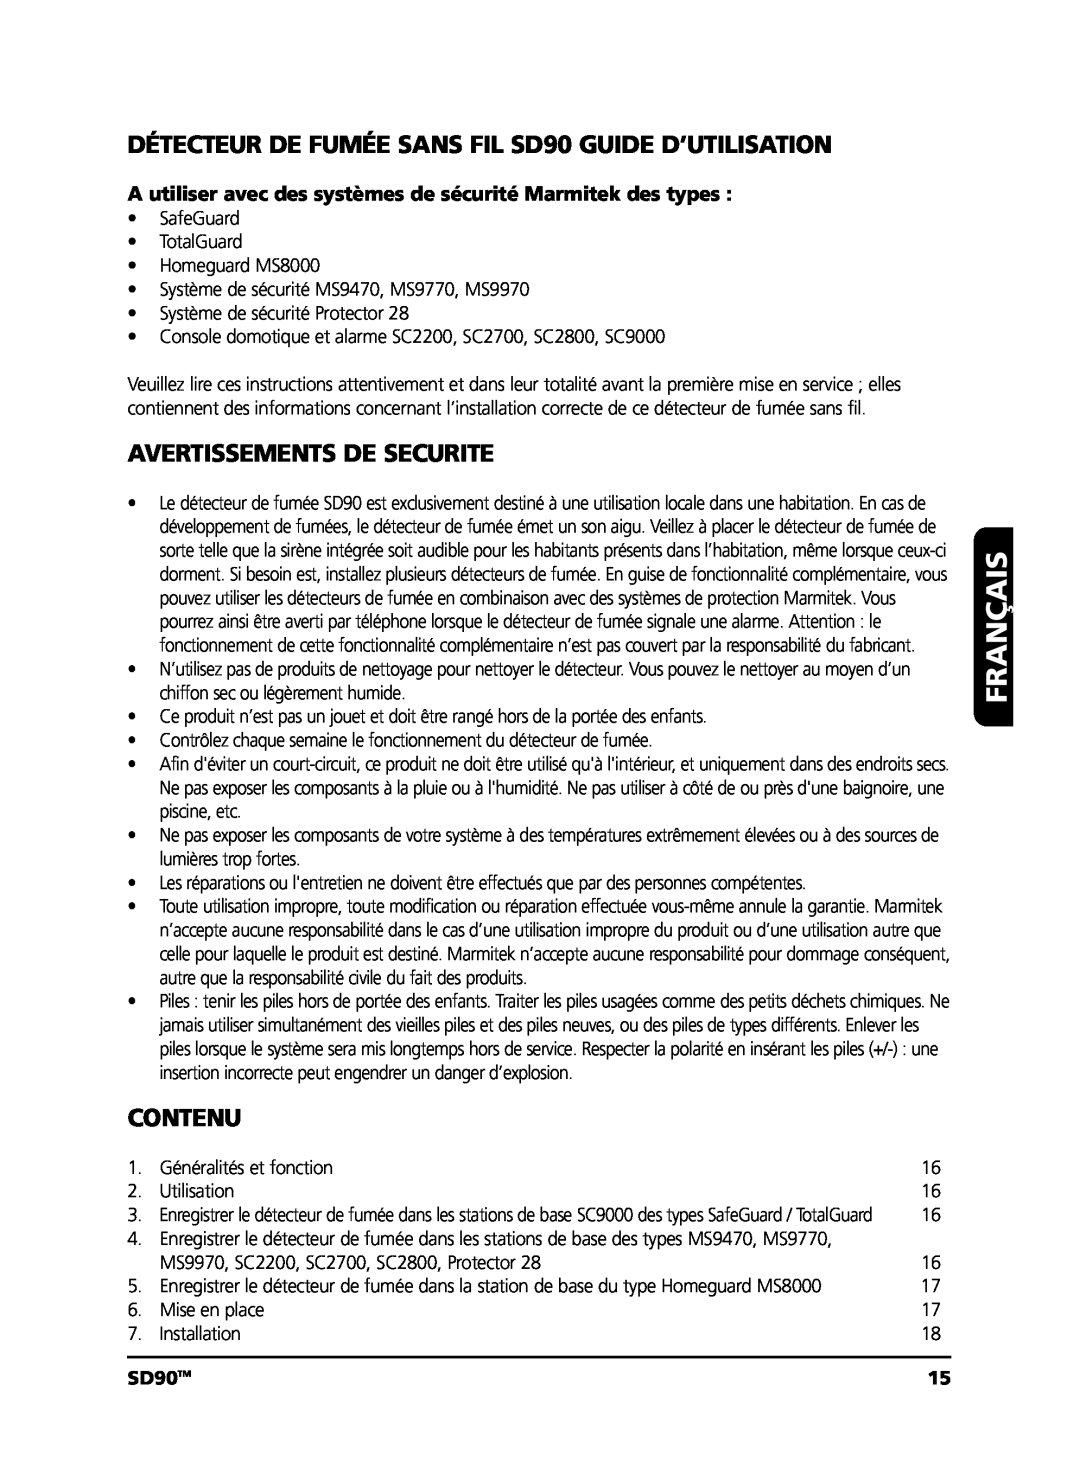 Marmitek user manual Français, Avertissements De Securite, Contenu, SD90TM 